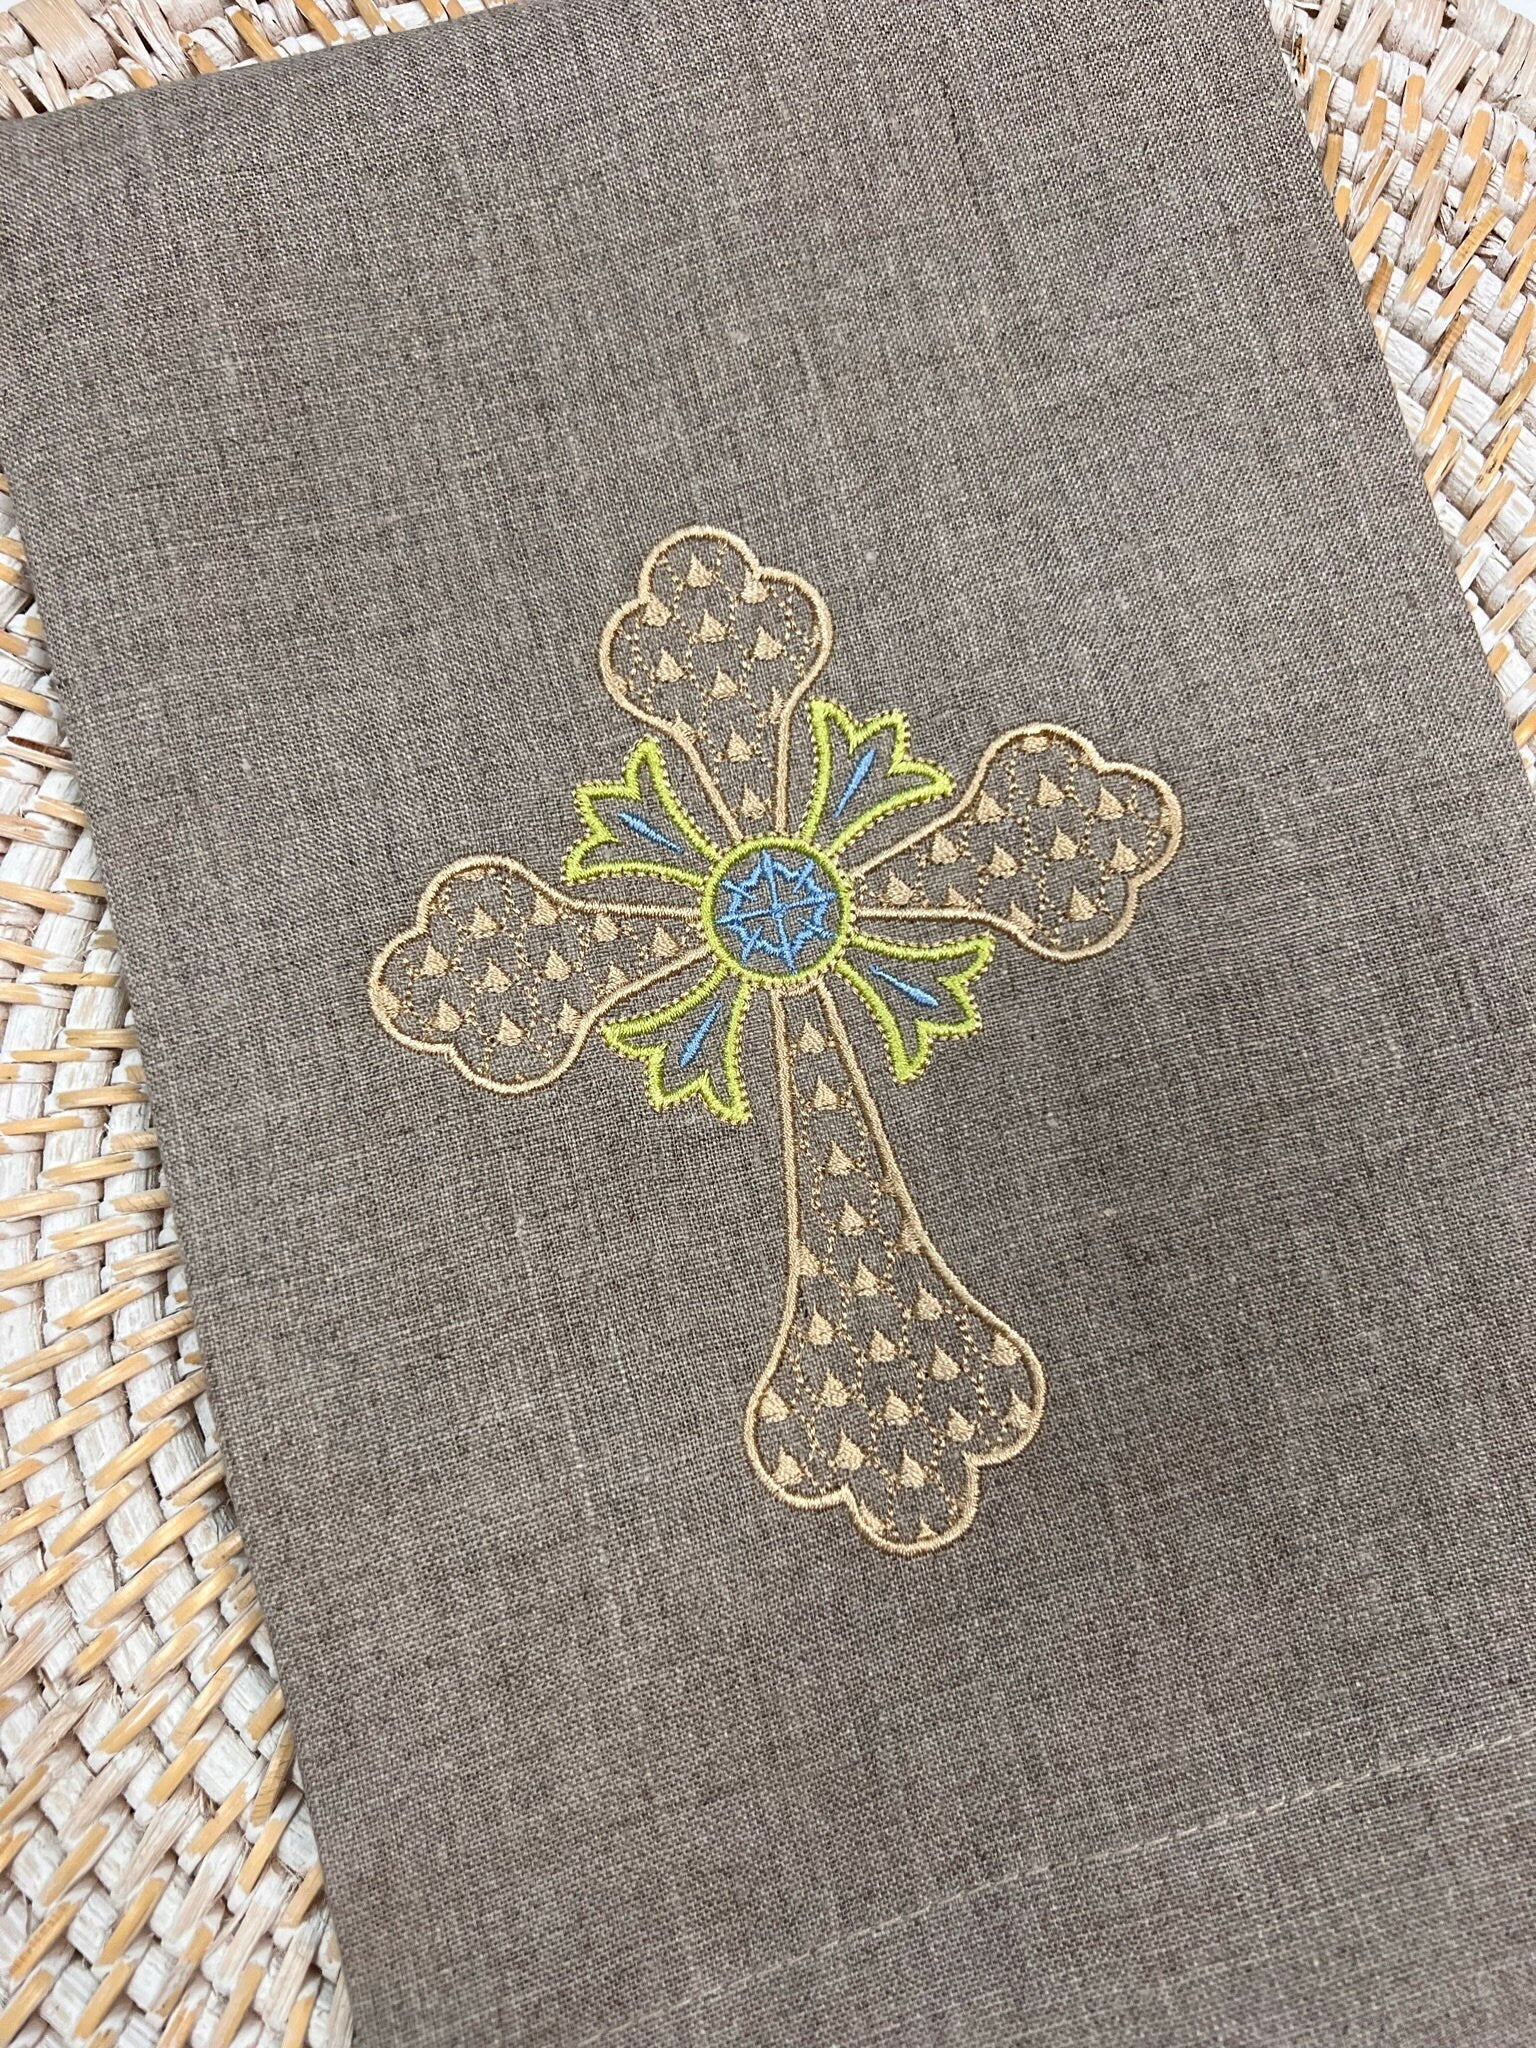 Embroidered Cross Hand Towel, Easter Tea Towel, Cross Kitchen Towel, Christian Easter Hostess Gift, Easter Decor, Baptism Towel, Baptism